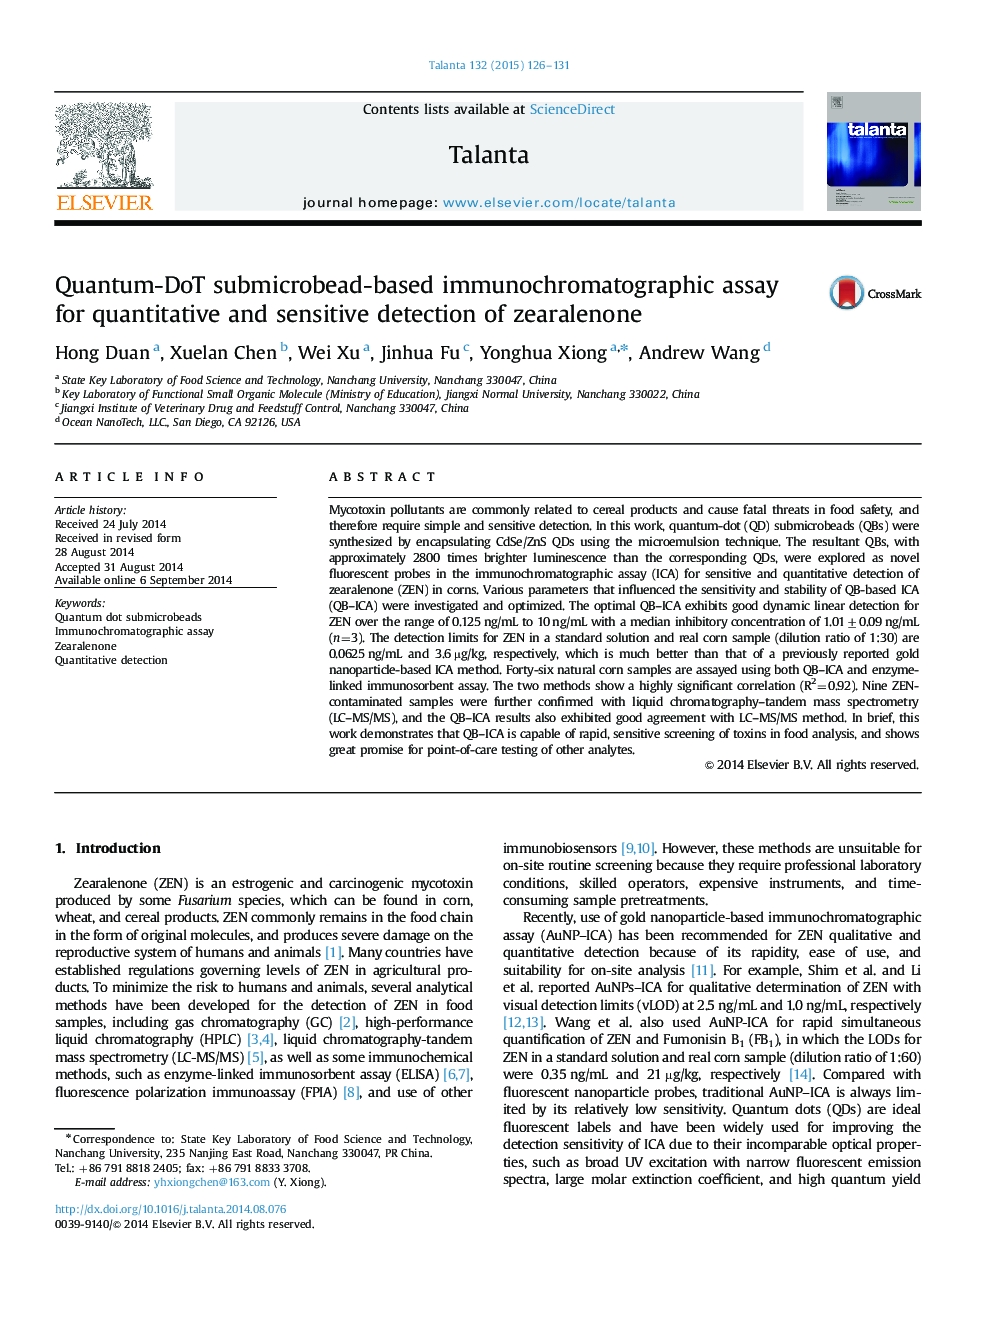 Quantum-DoT submicrobead-based immunochromatographic assay for quantitative and sensitive detection of zearalenone